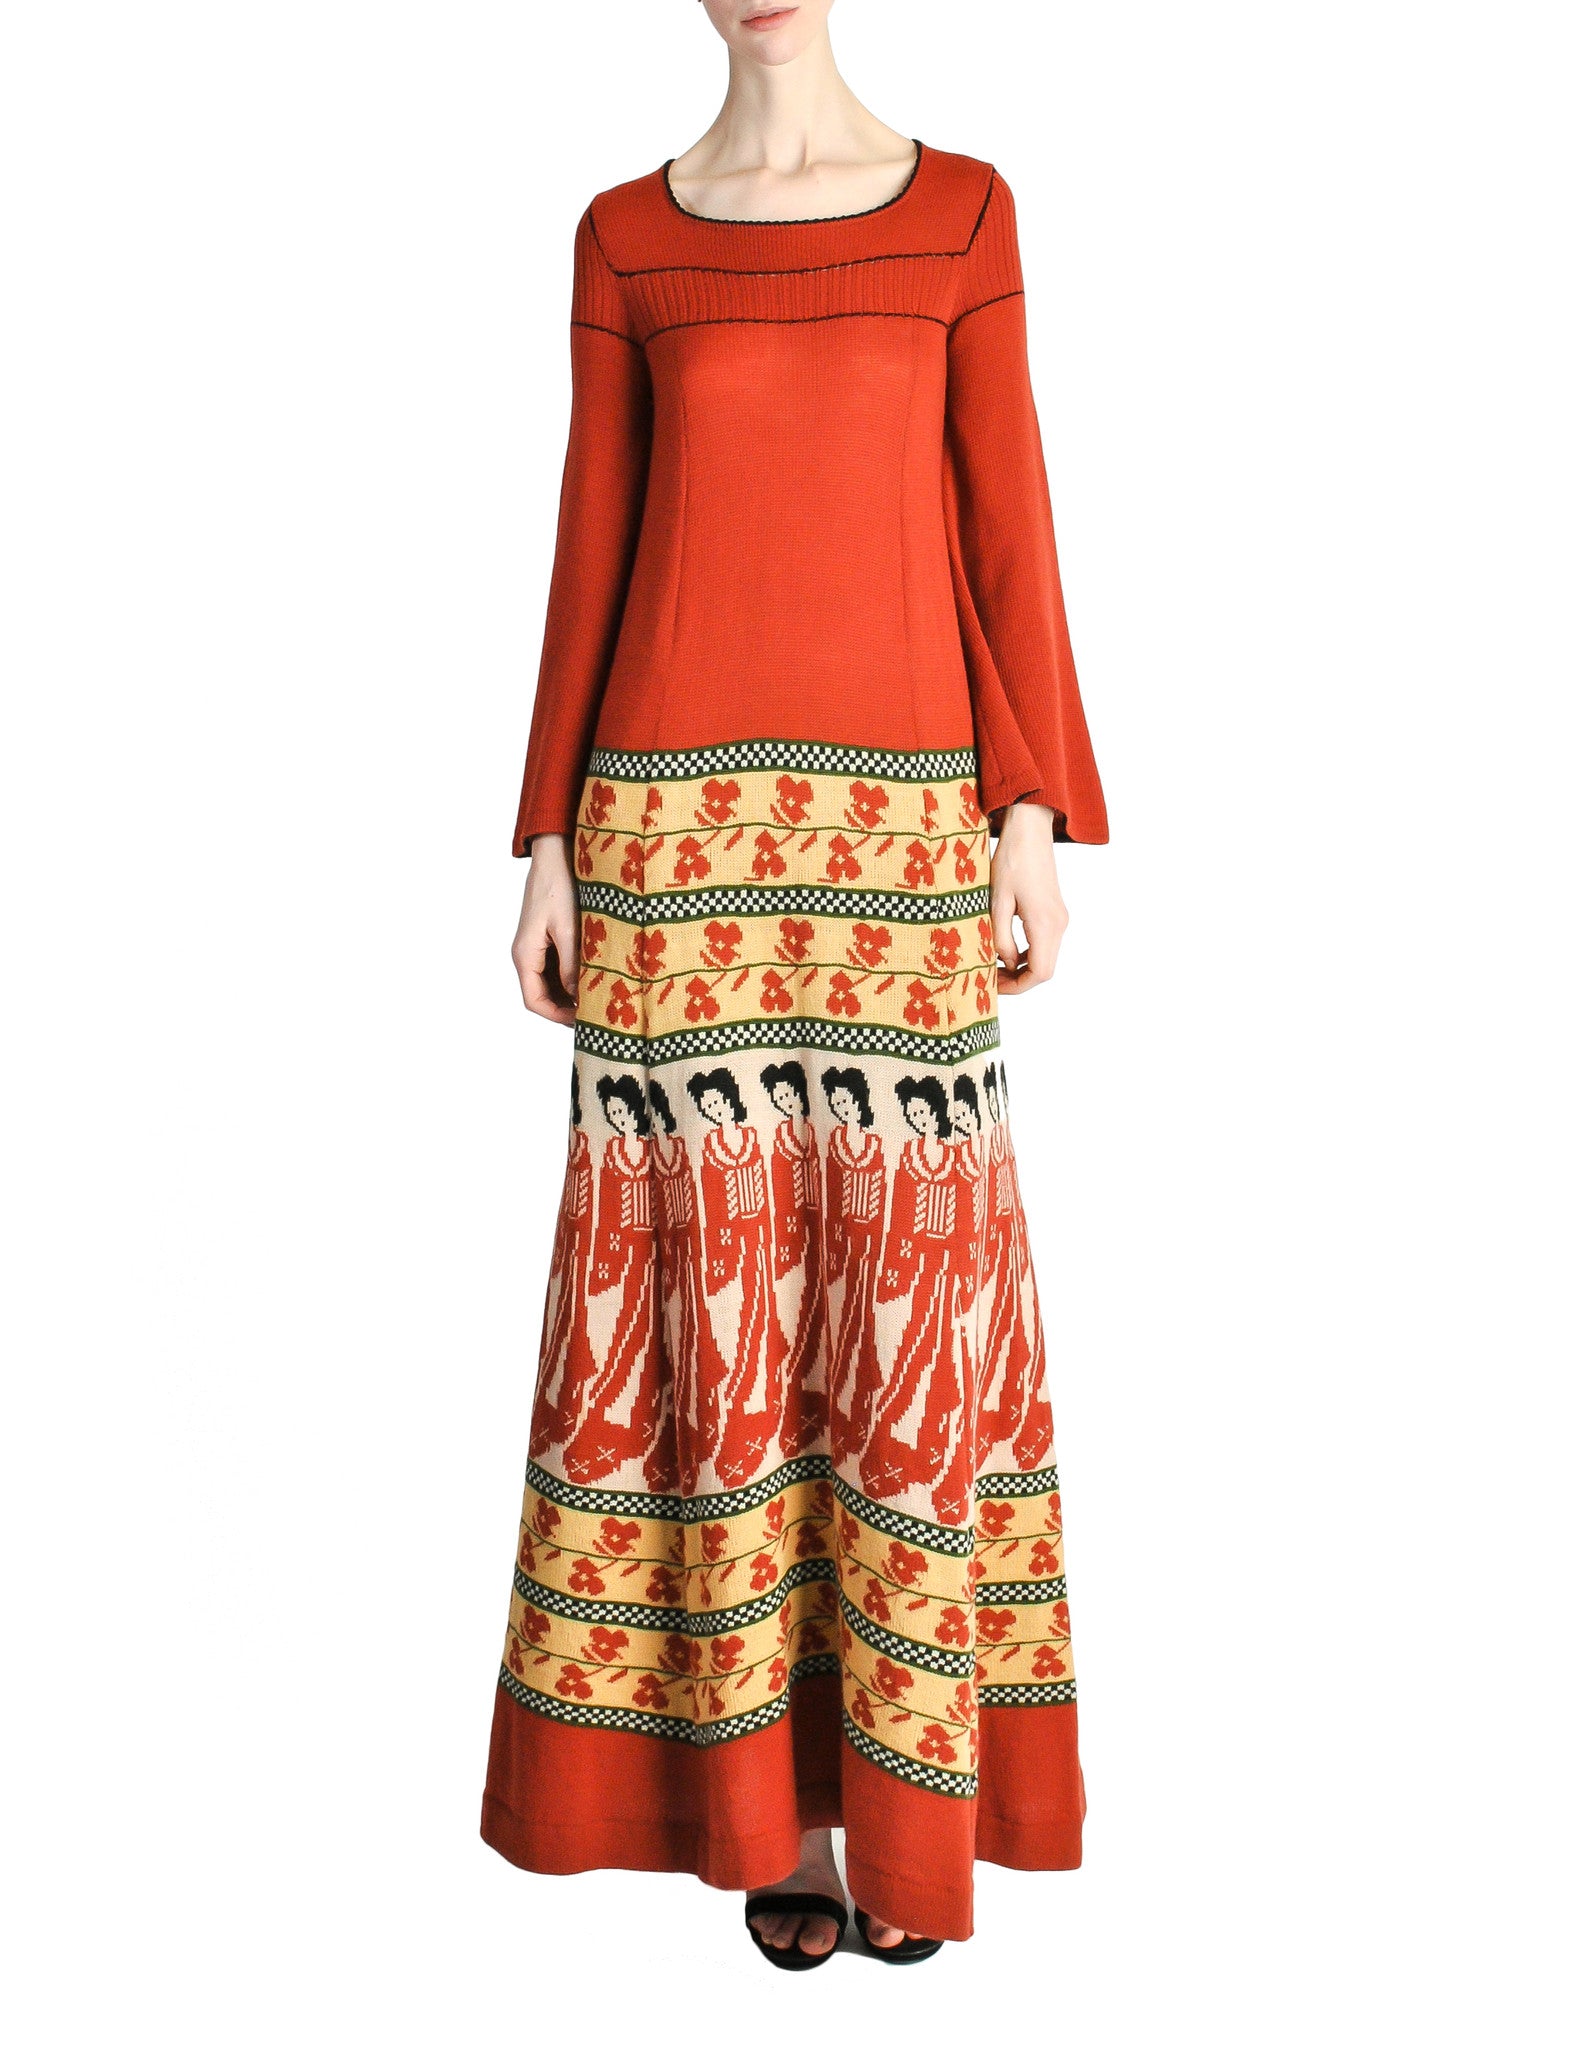 Clutch Cargo Vintage Rust Floral Geisha Knit Sweater Dress - Amarcord Vintage Fashion
 - 1